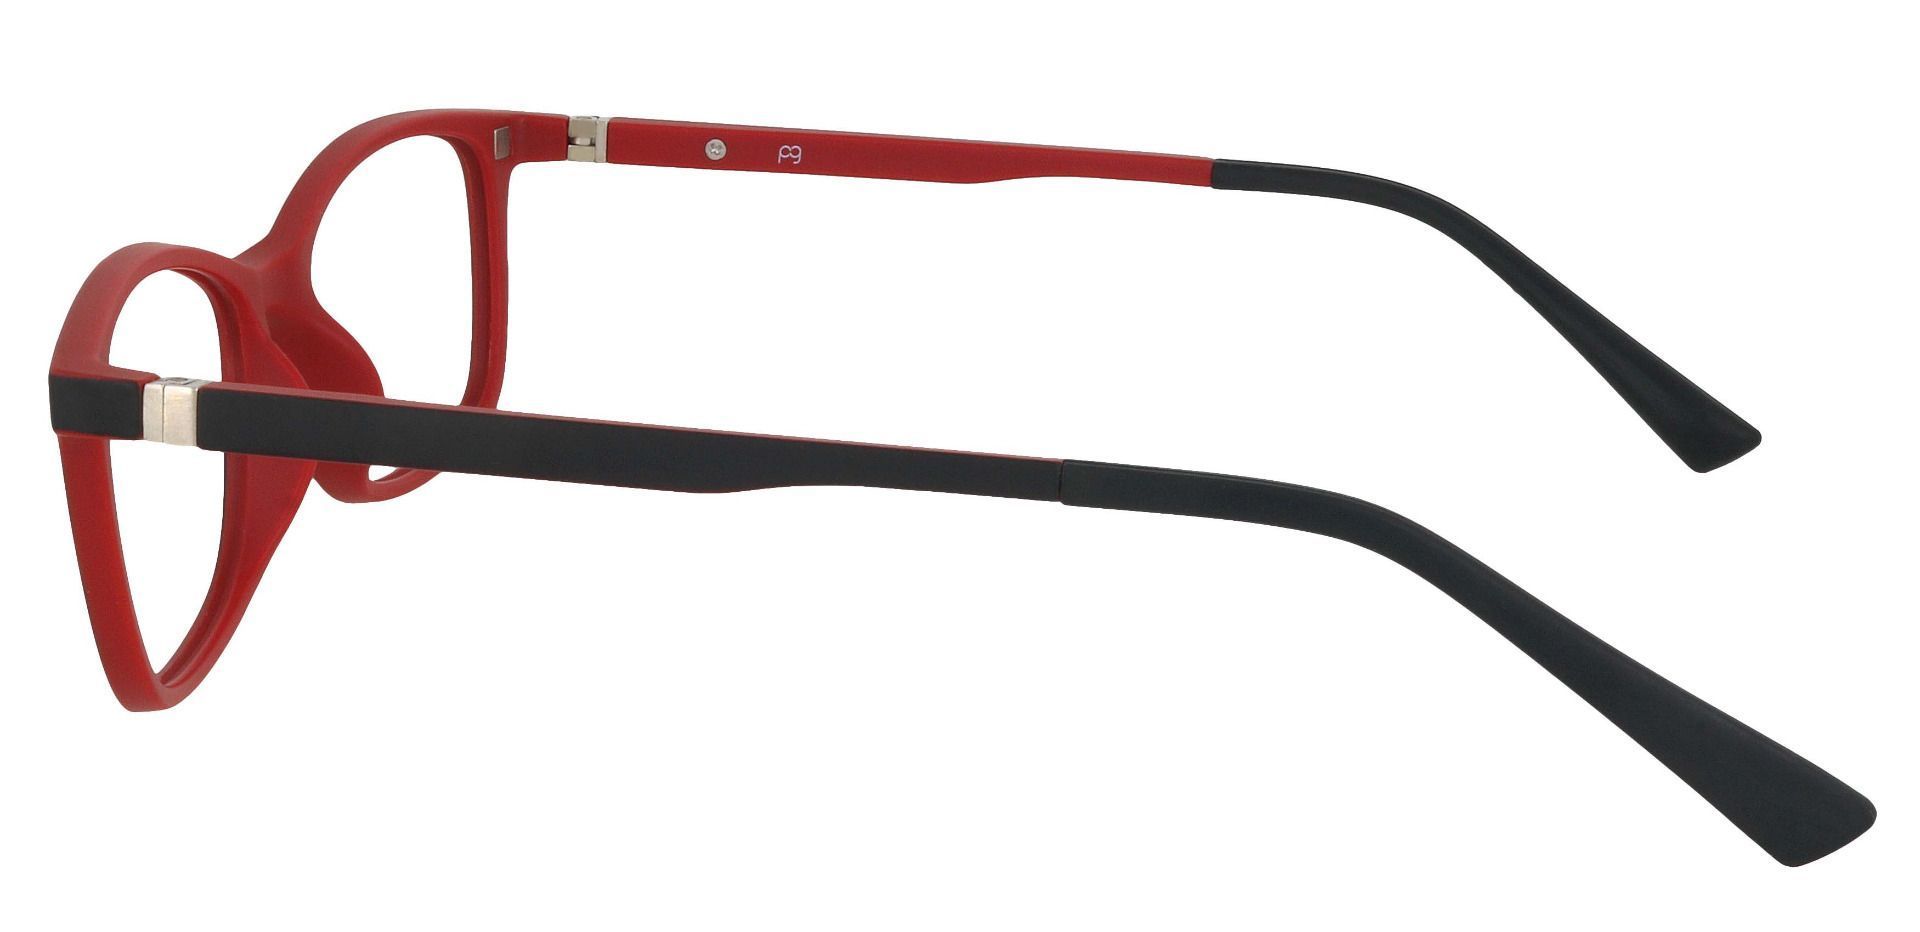 Segura Oval Eyeglasses Frame - Red